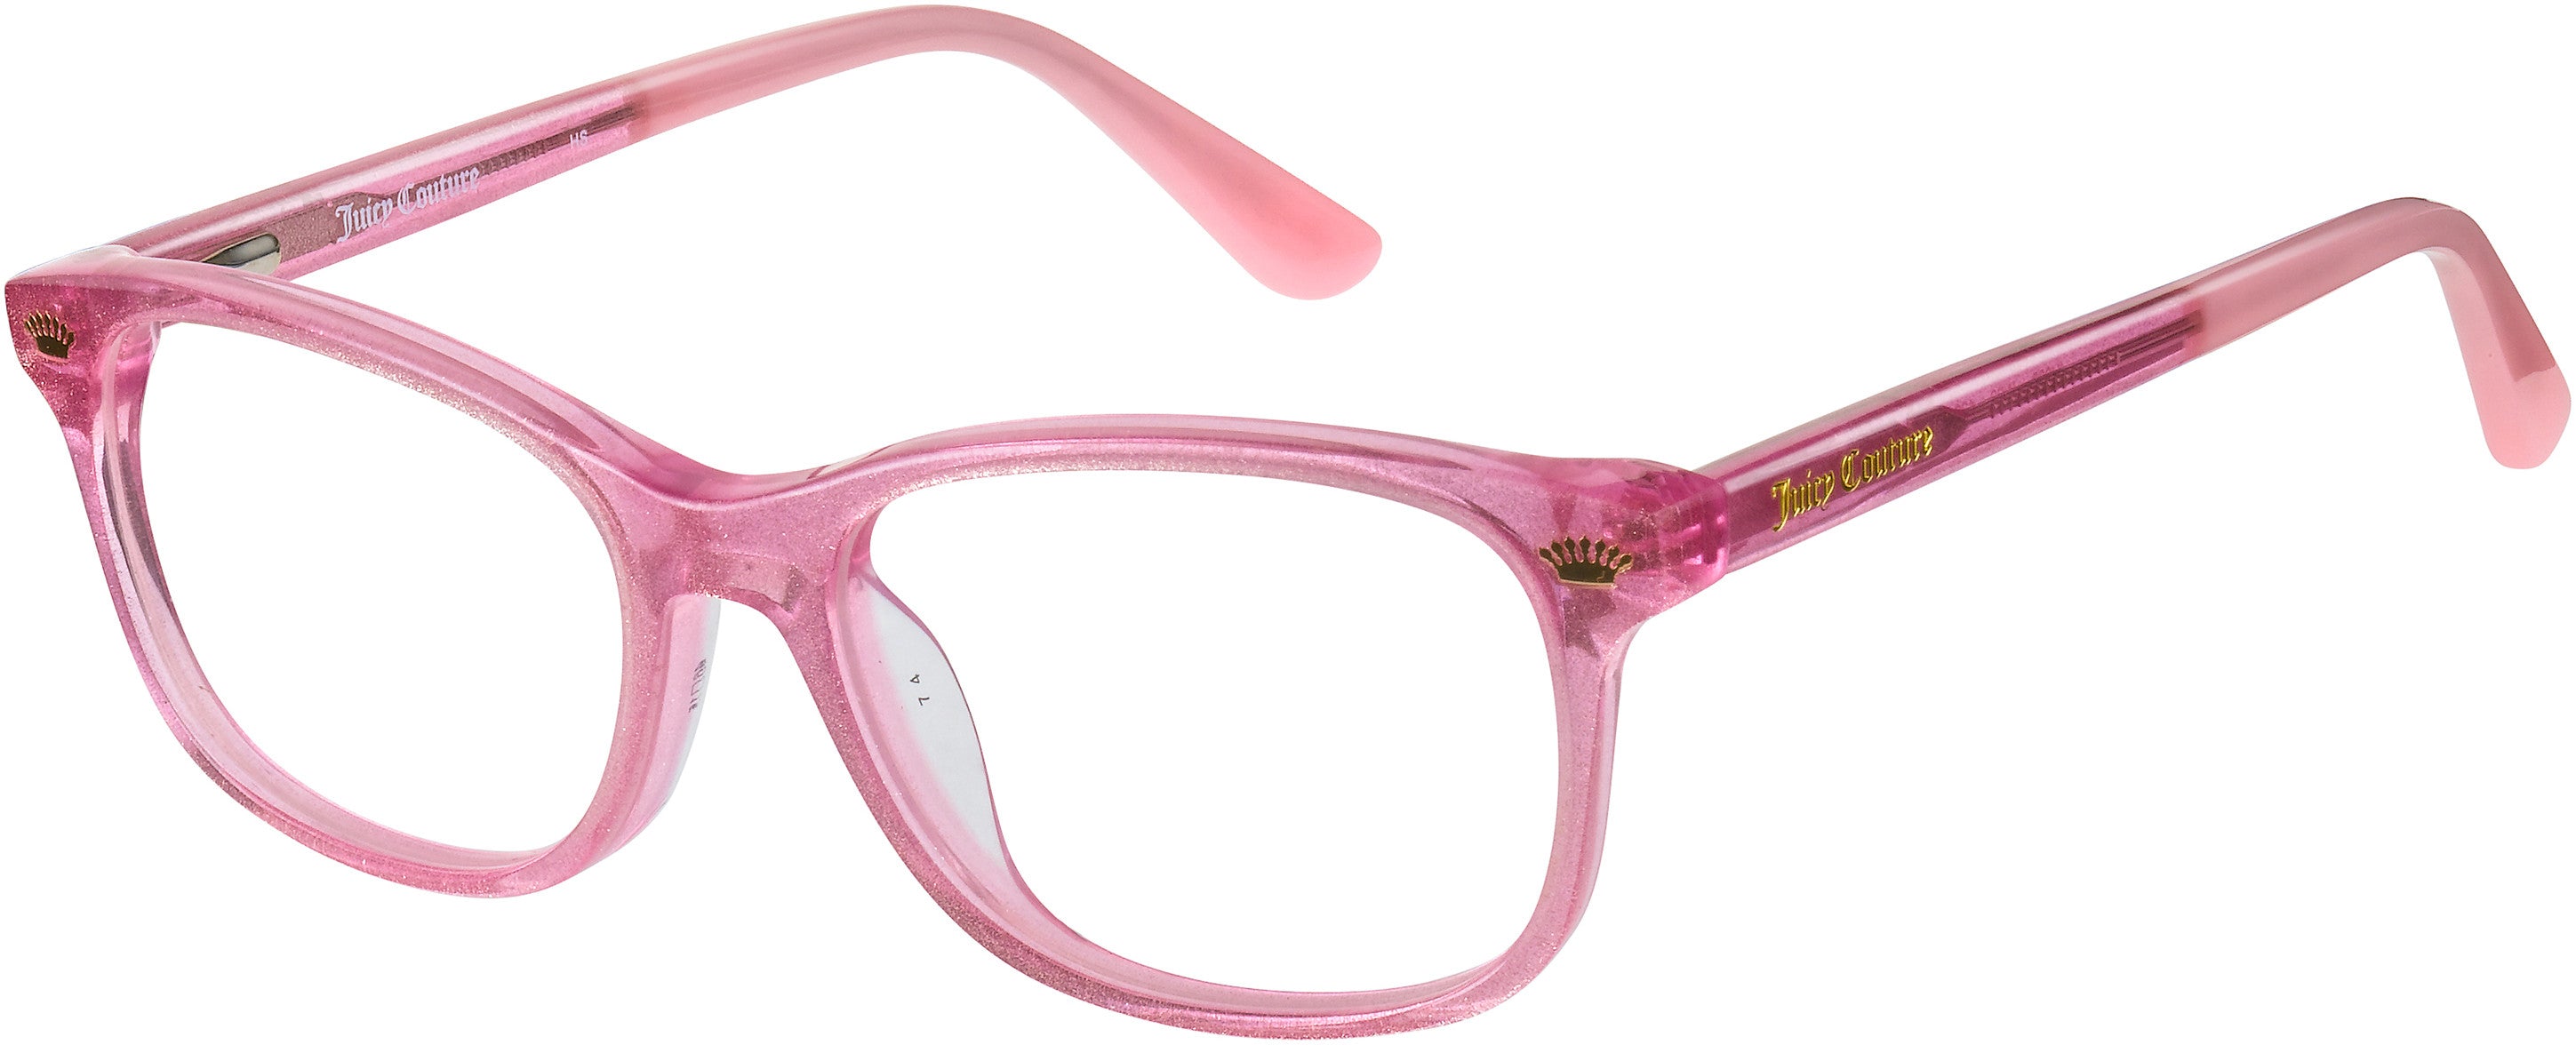 Juicy Couture Juicy 933 Rectangular Eyeglasses 0W66-0W66  Pink Glitter (00 Demo Lens)